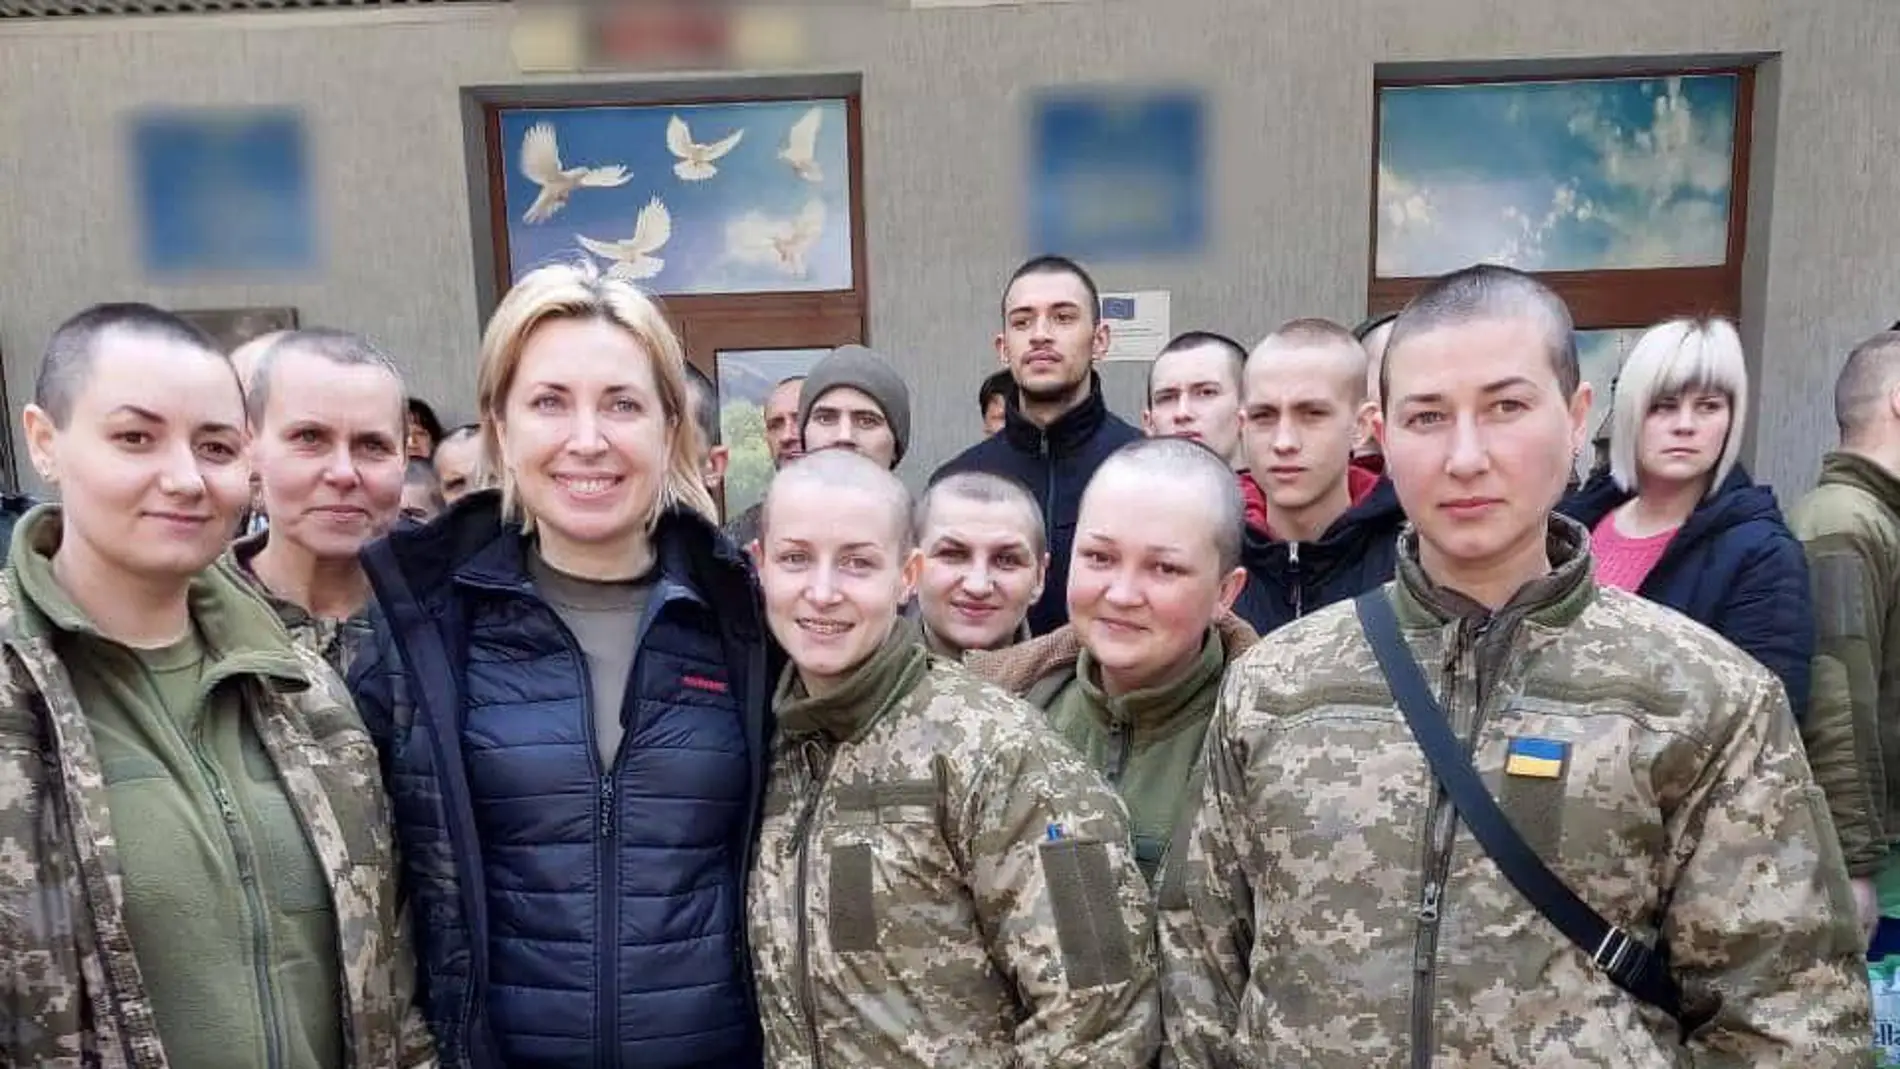 Soldados Ucrania